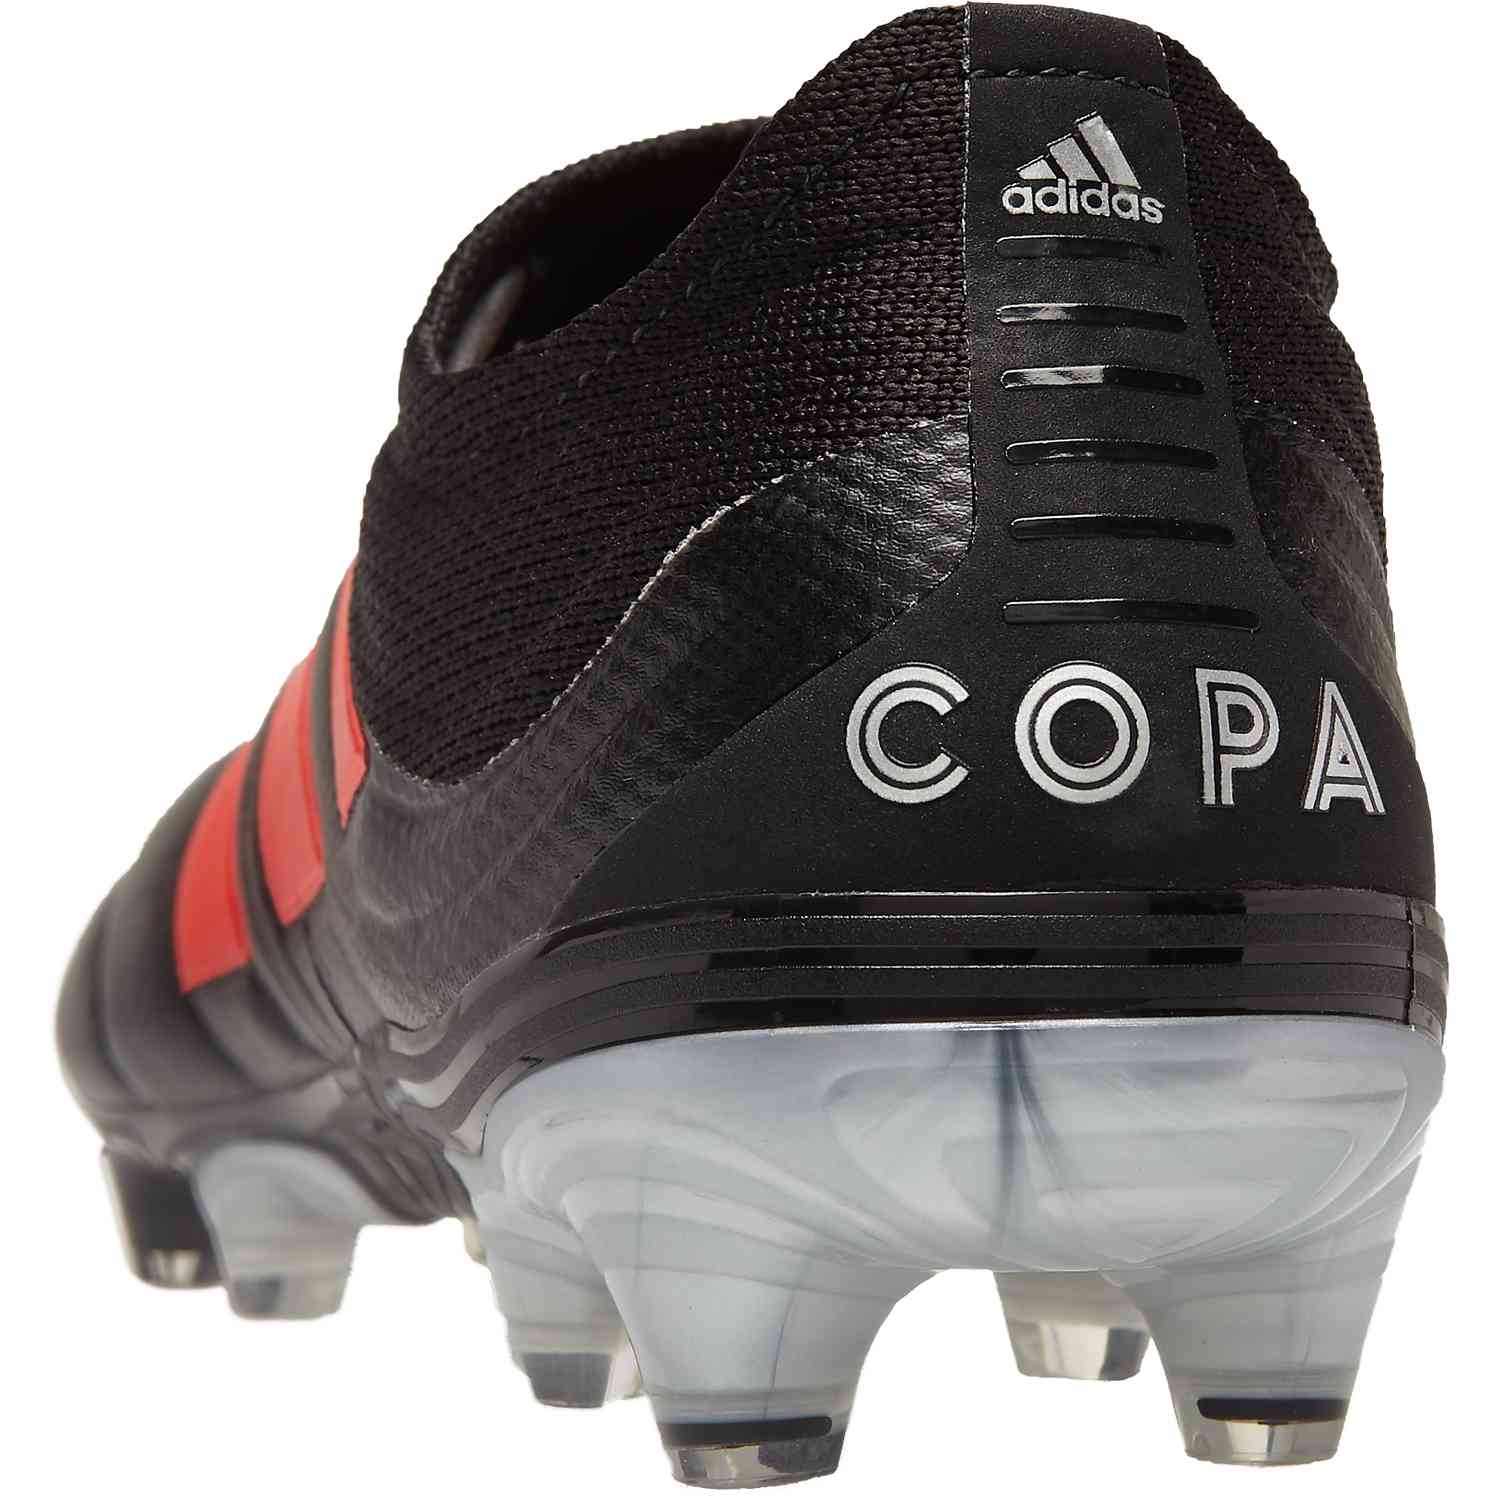 Adidas Copa 19 1 Fg 302 Redirect Soccer Master